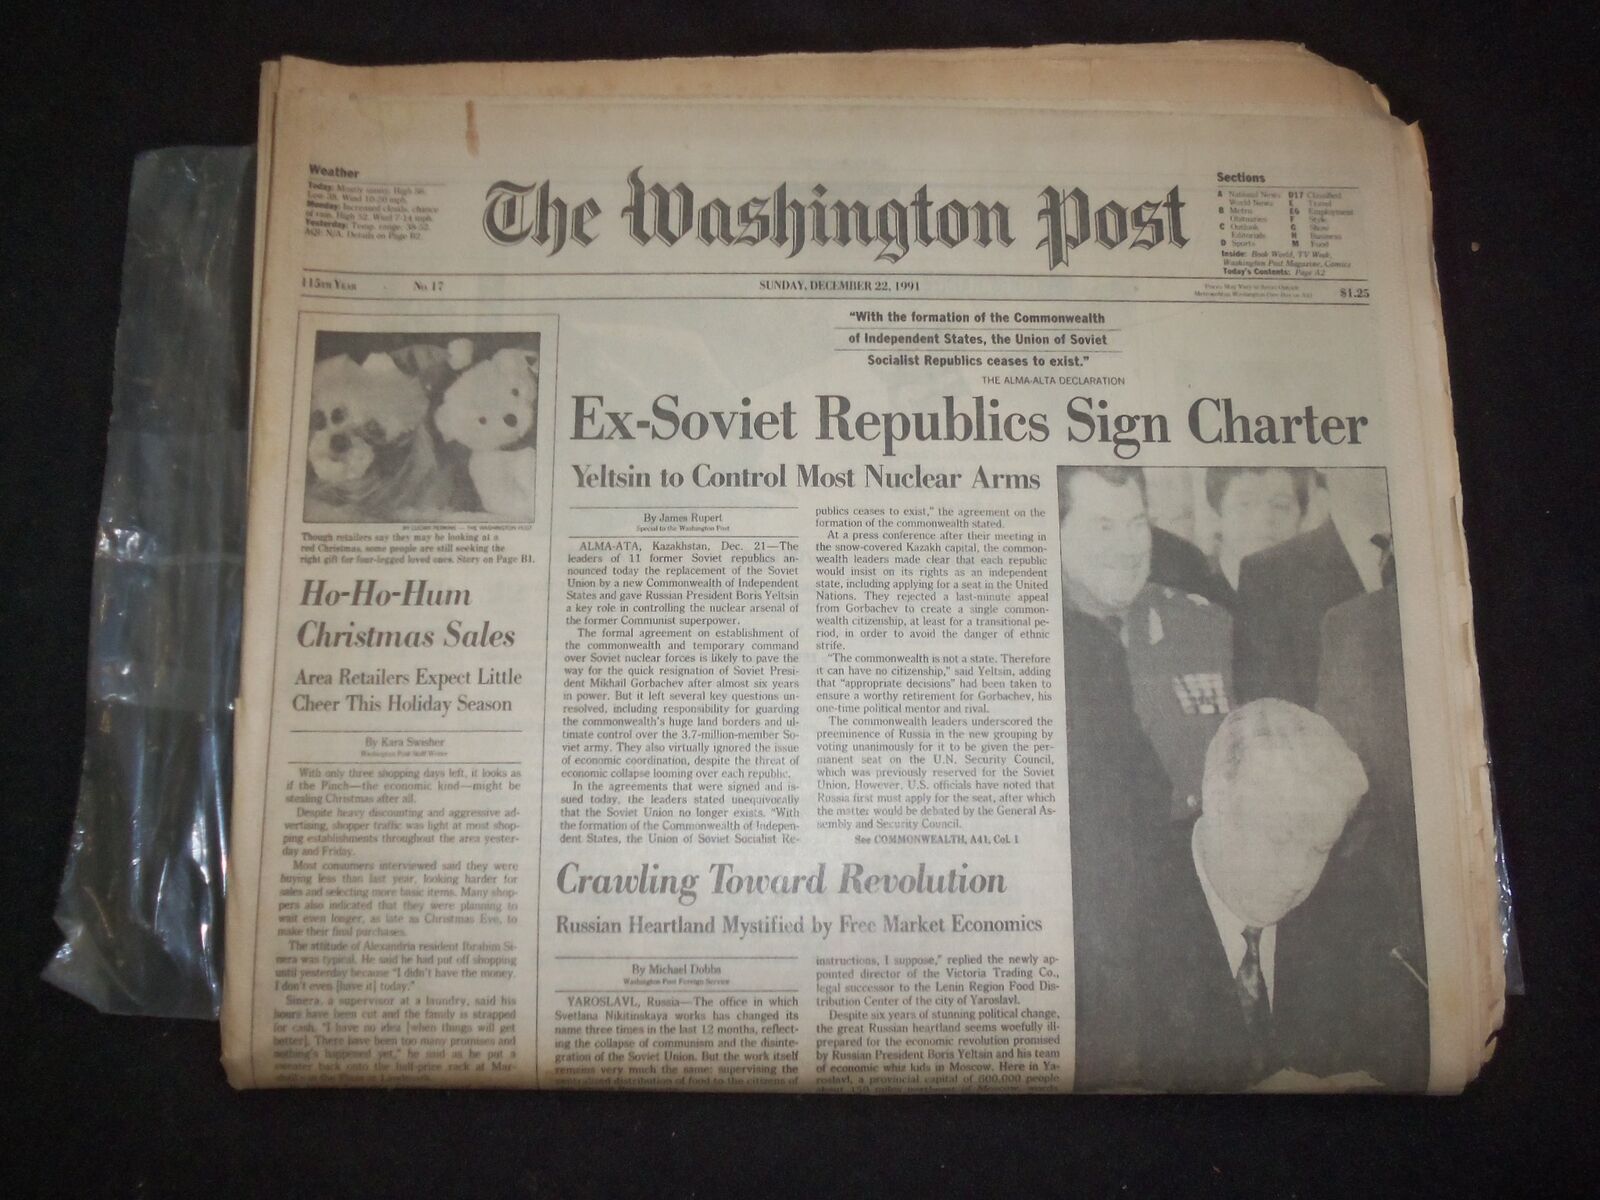 1991 DEC 22 WASHINGTON POST NEWSPAPER -EX-SOVIET REPUBLICS SIGN CHARTER- NP 8316